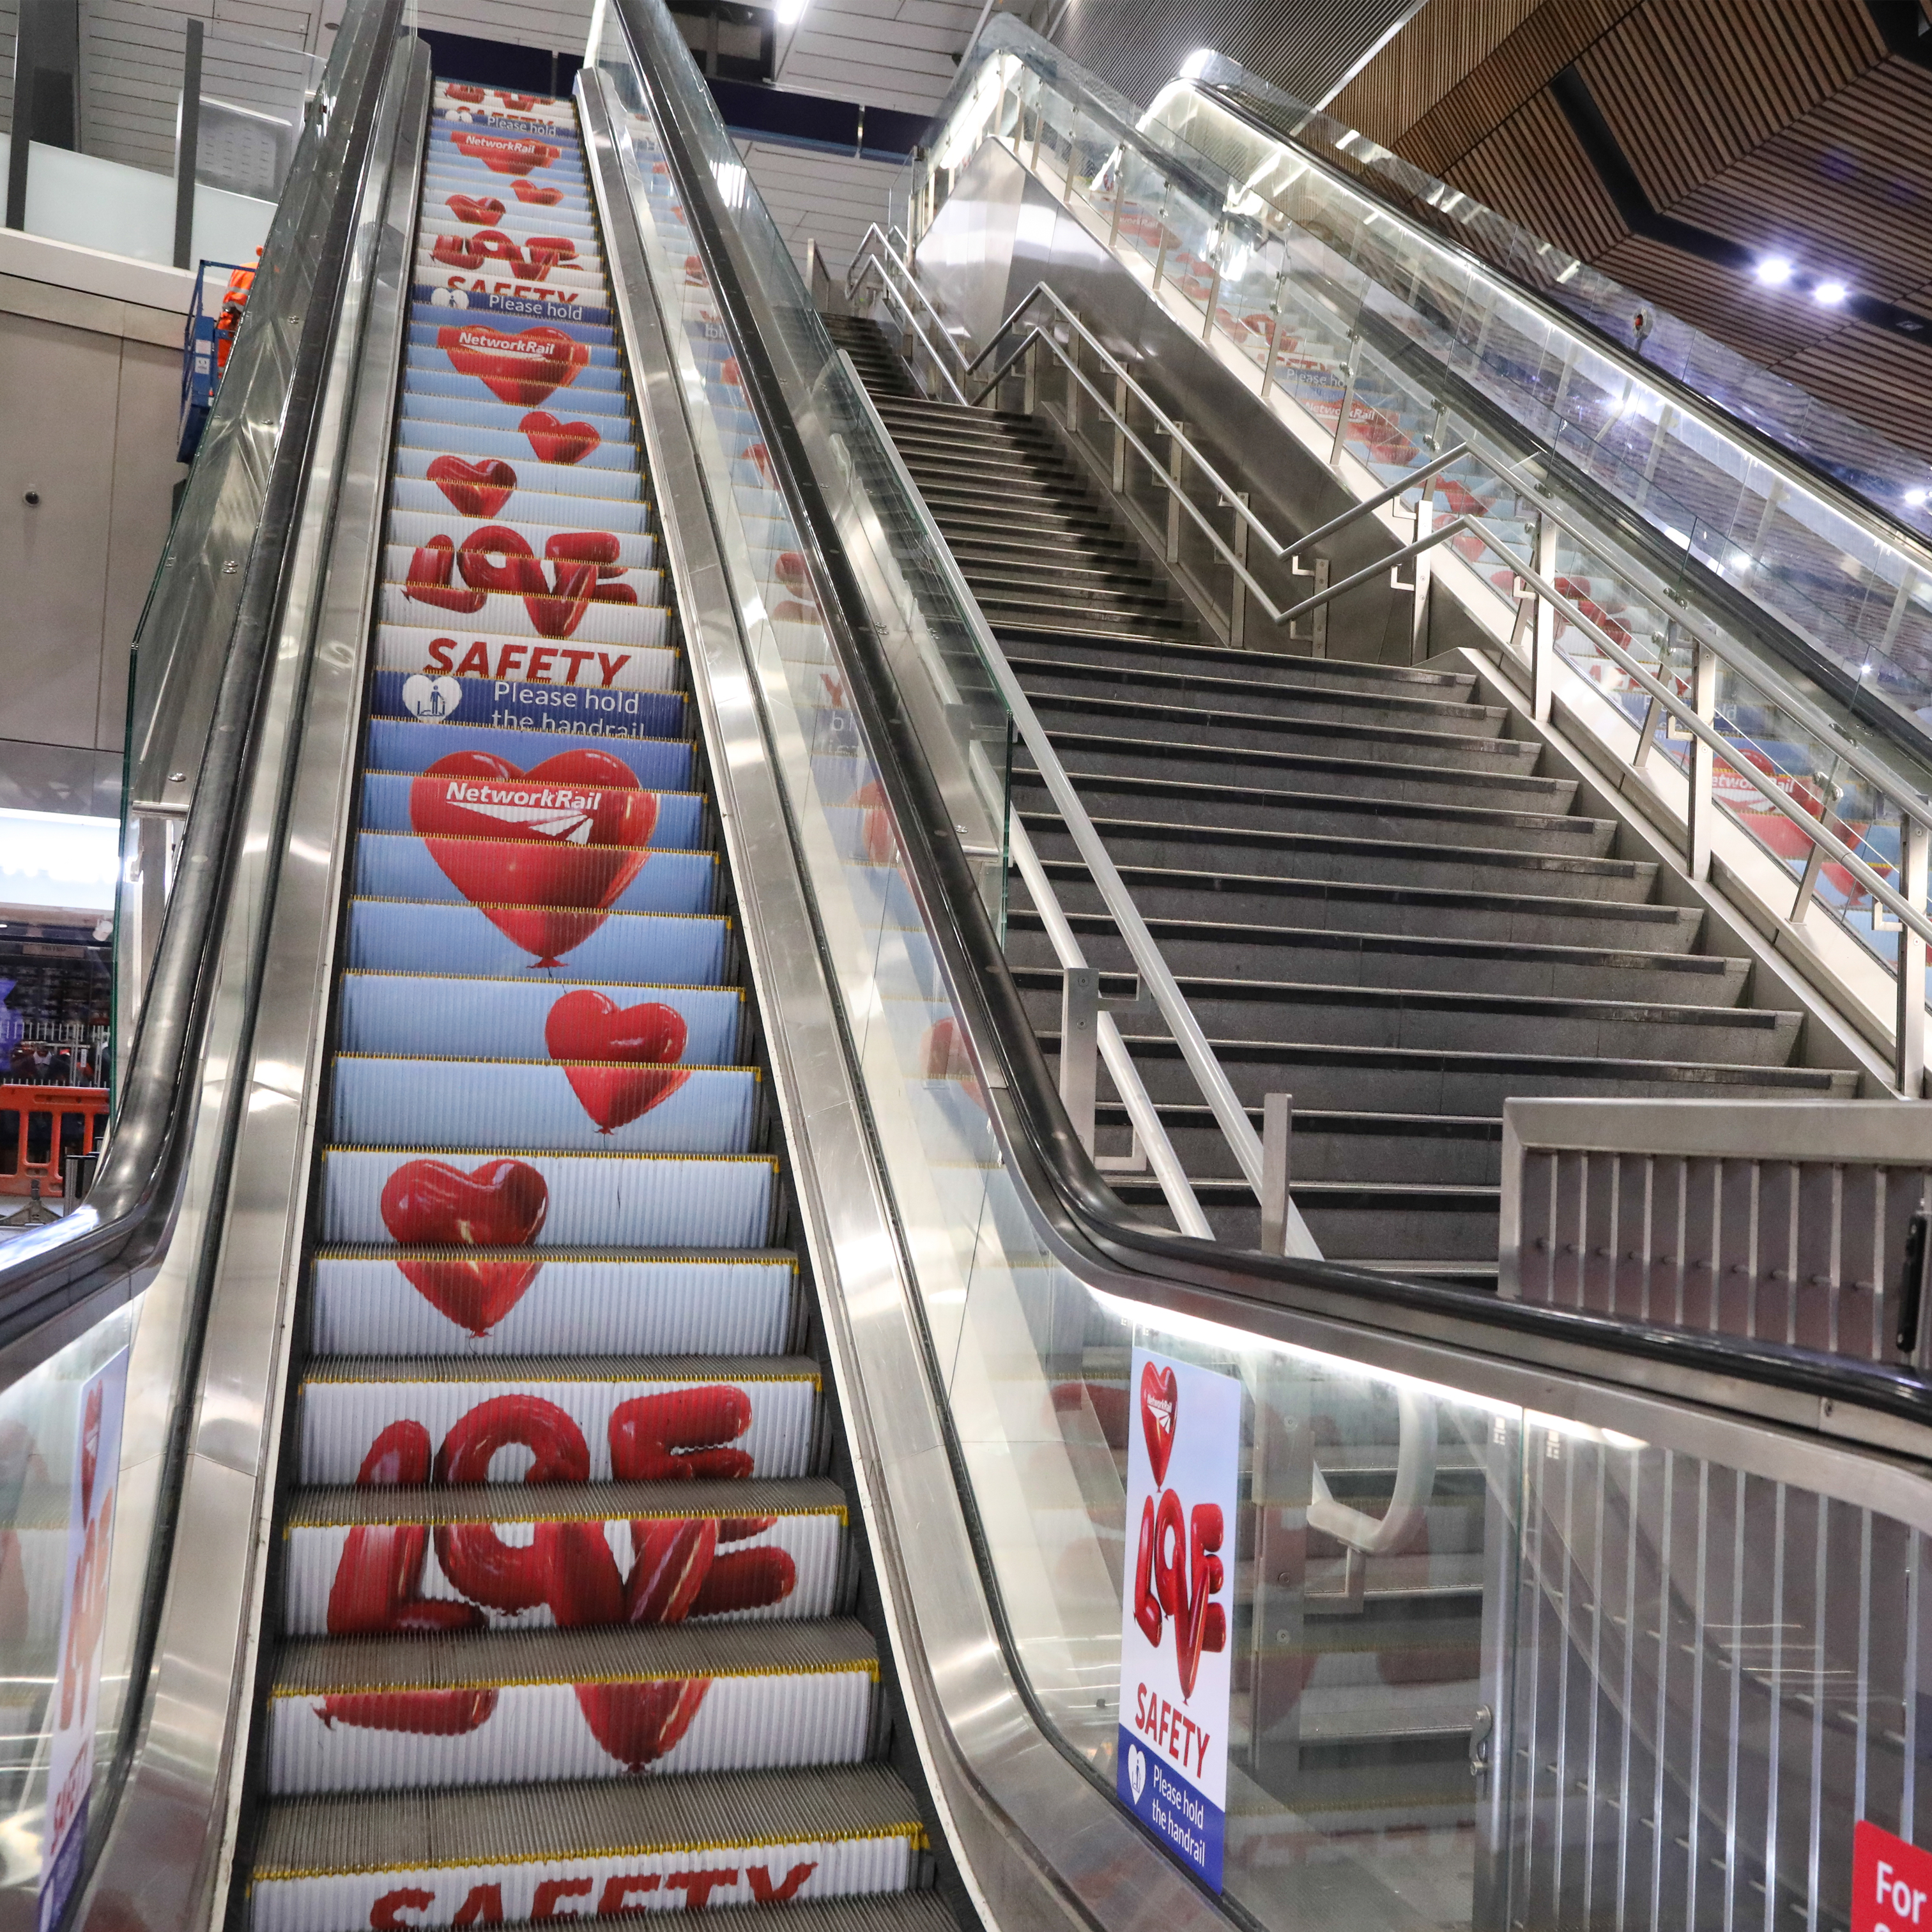 Network Rail Love Safety, Escalator Campaign, London Bridge Station